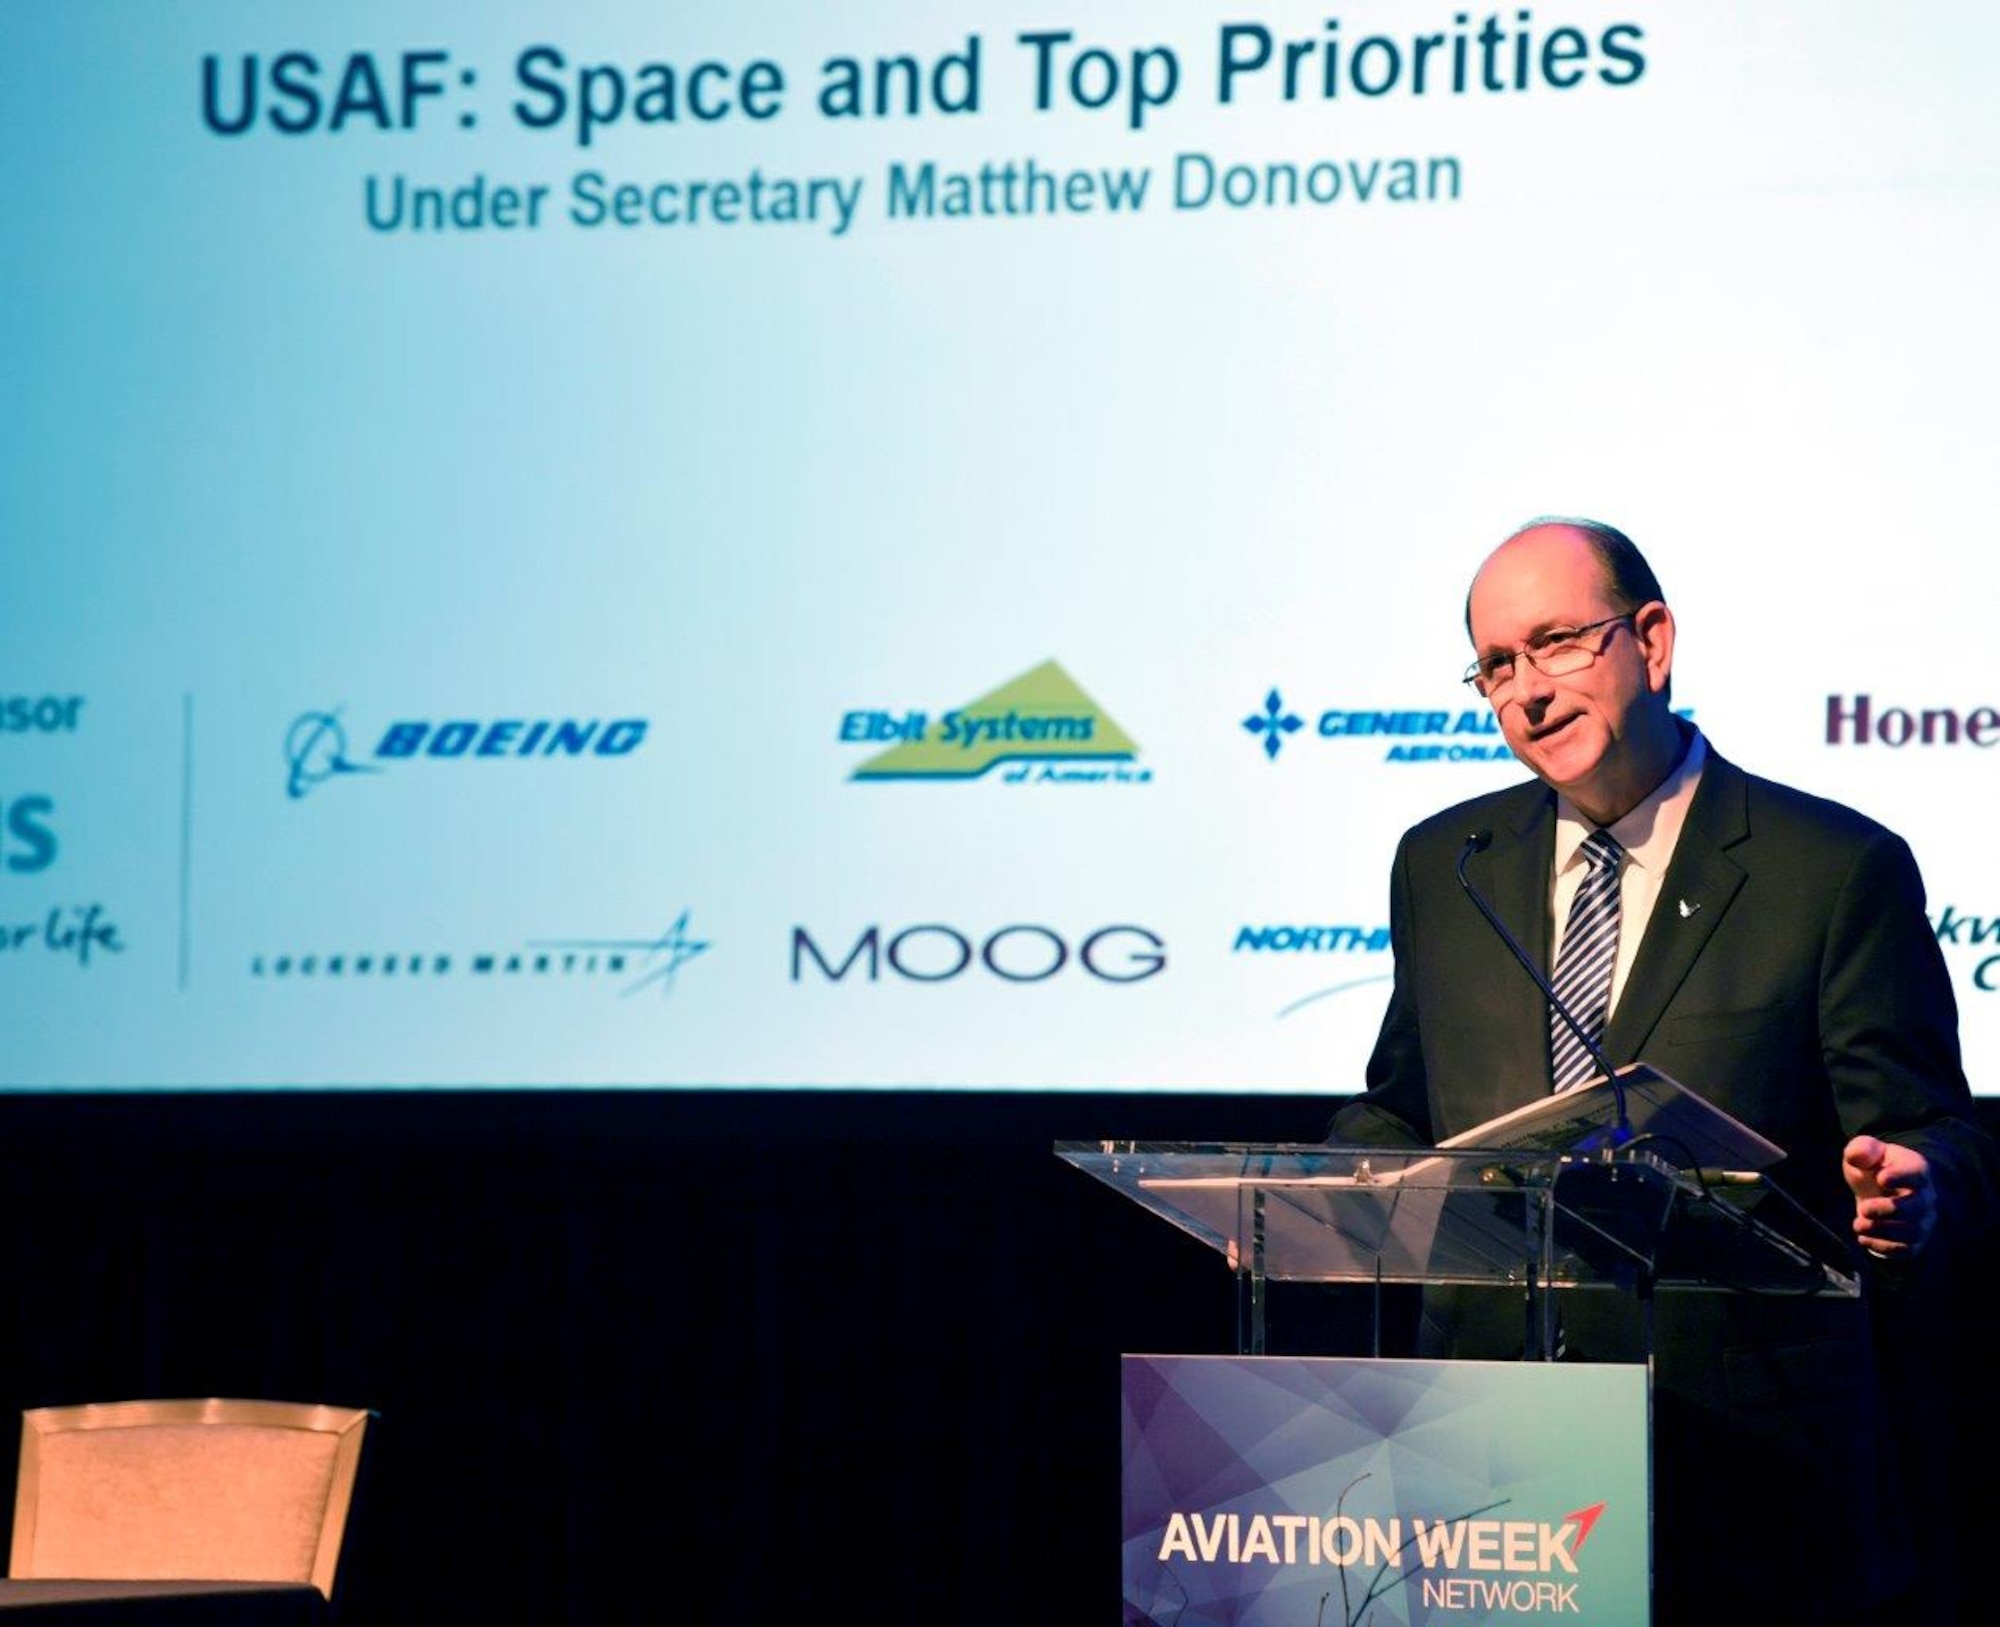 USecAF addresses innovation at symposium